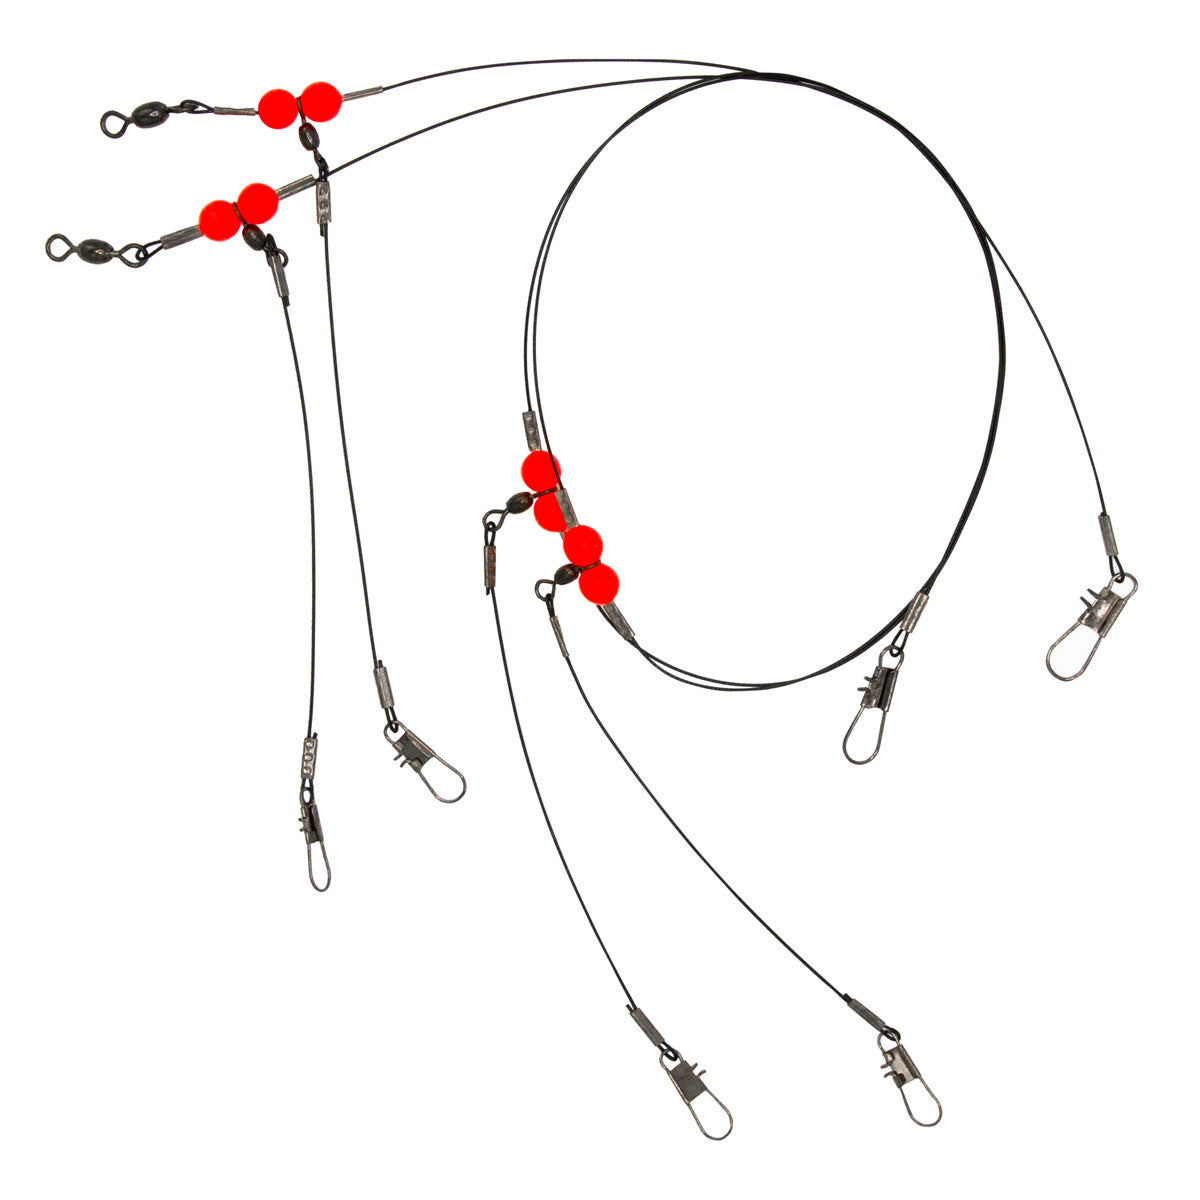 Double Drop Rig, Mono or Wire – Rite Angler